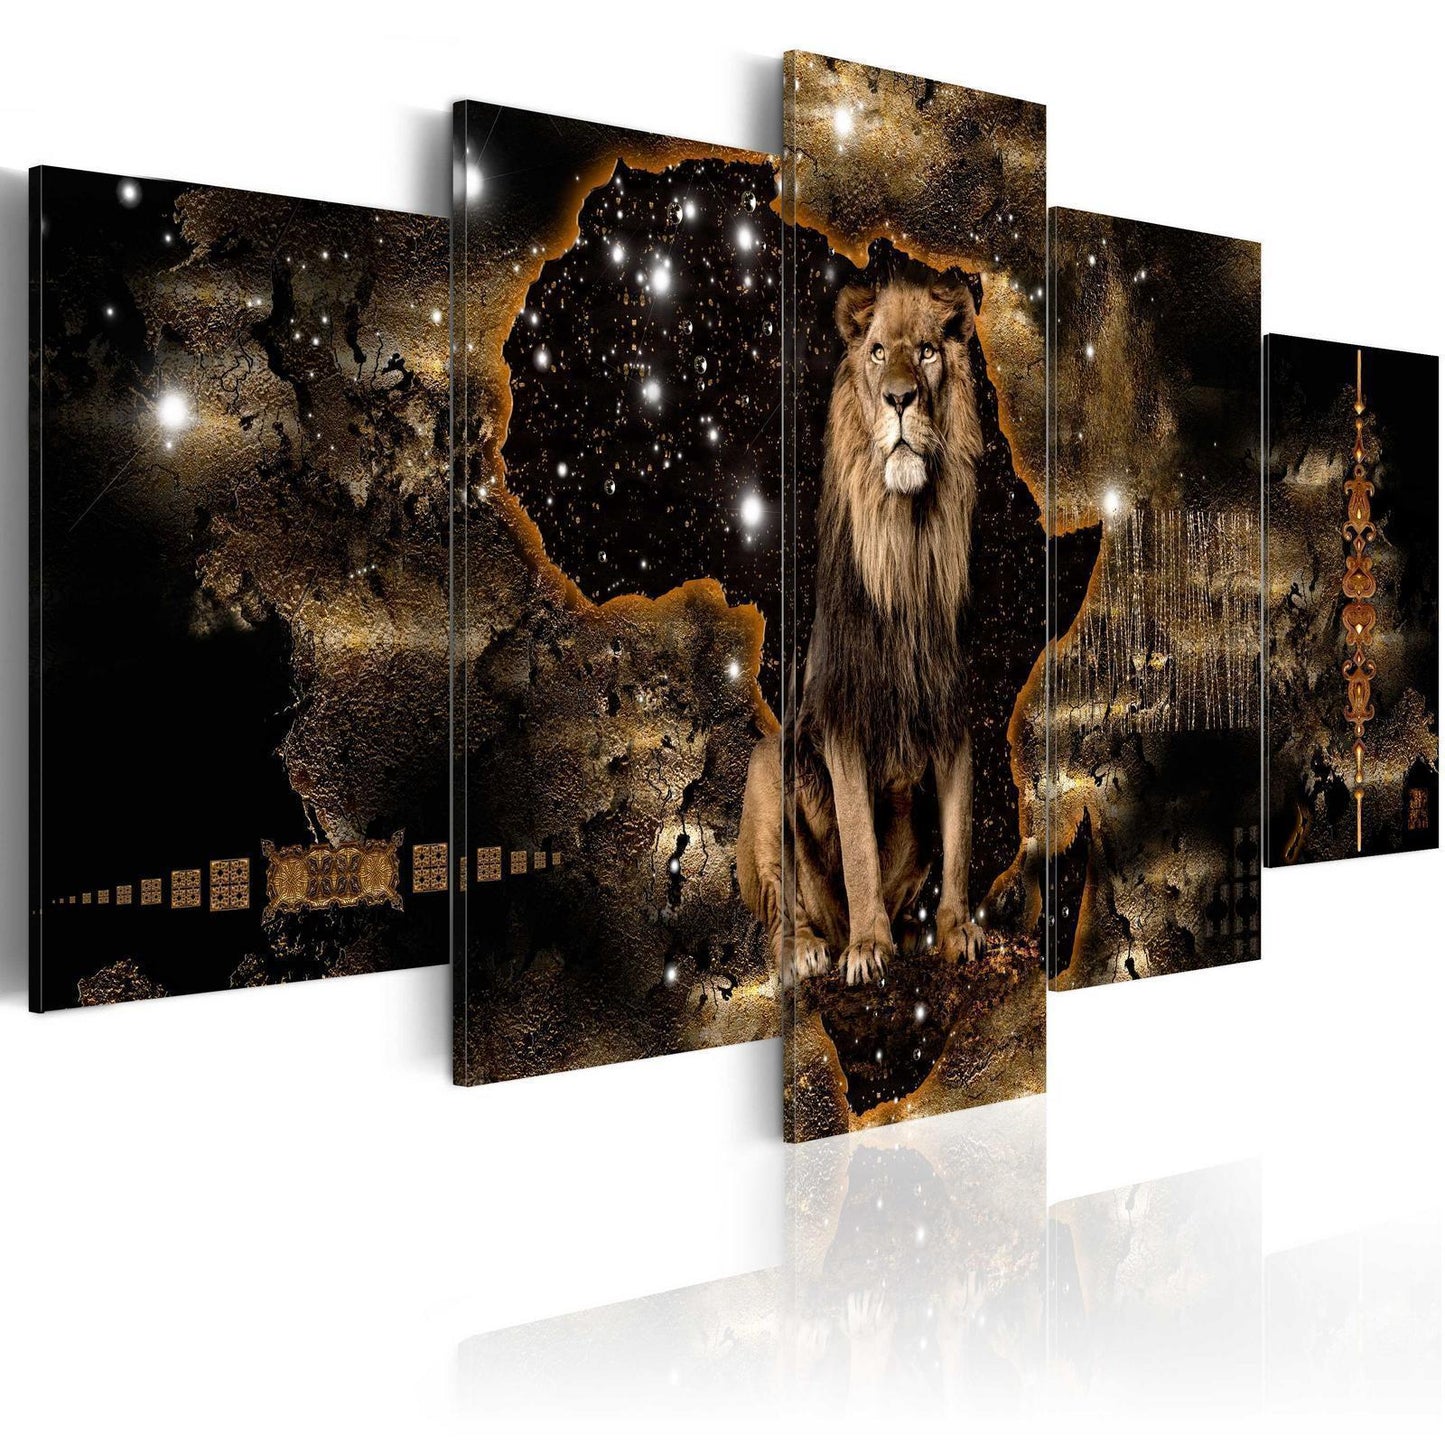 Image on acrylic glass - Golden Lion